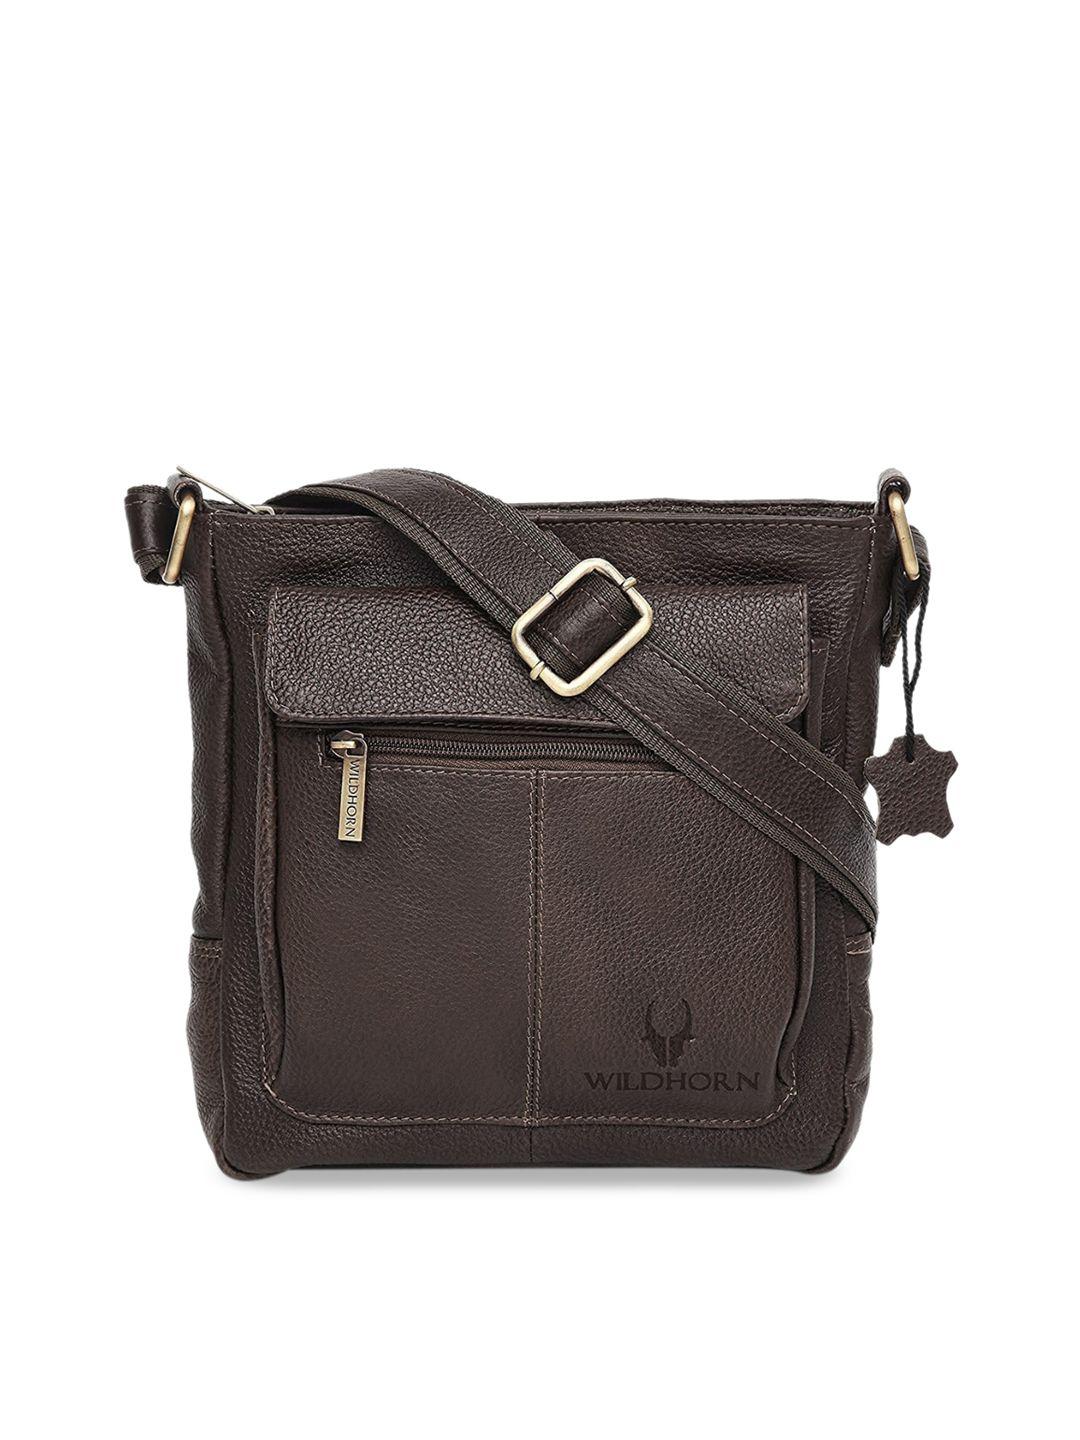 wildhorn brown leather bowling sling bag